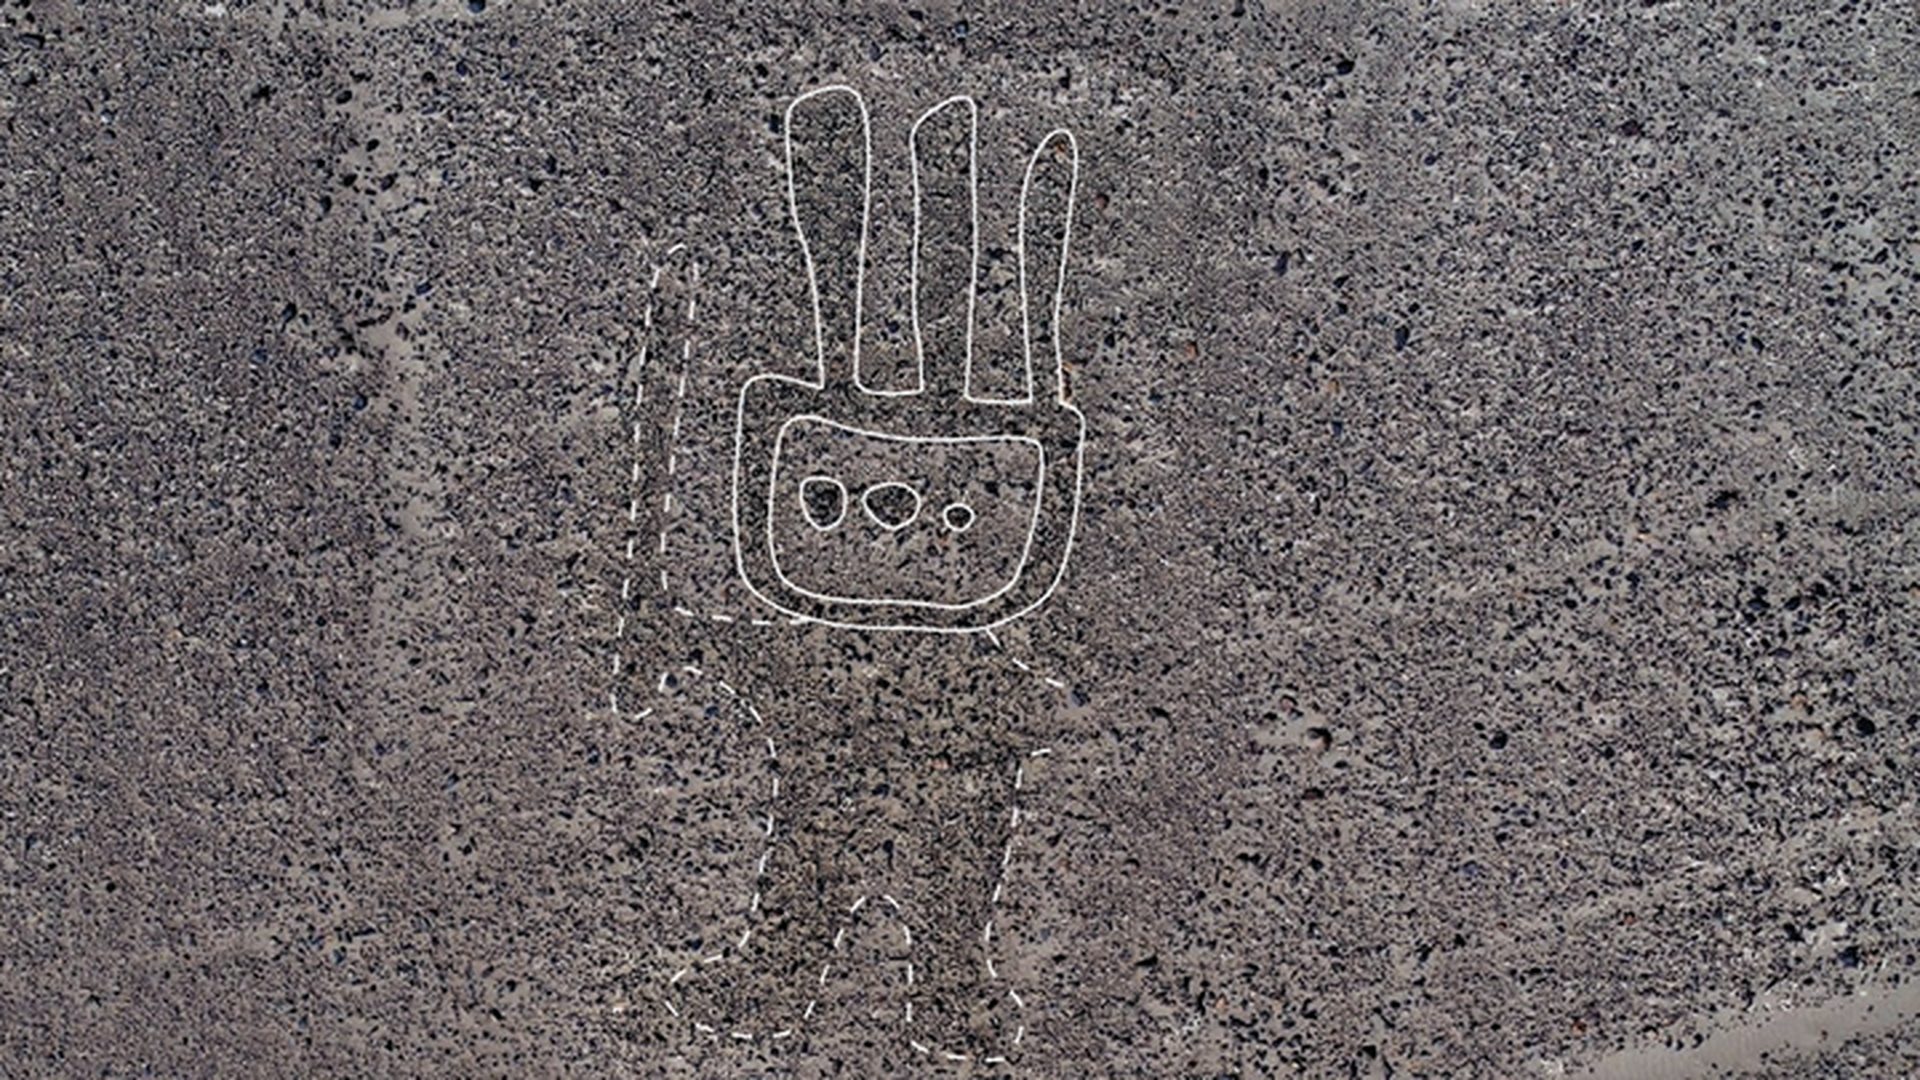 AI Reveals Ancient Symbols in Peruvian Desert